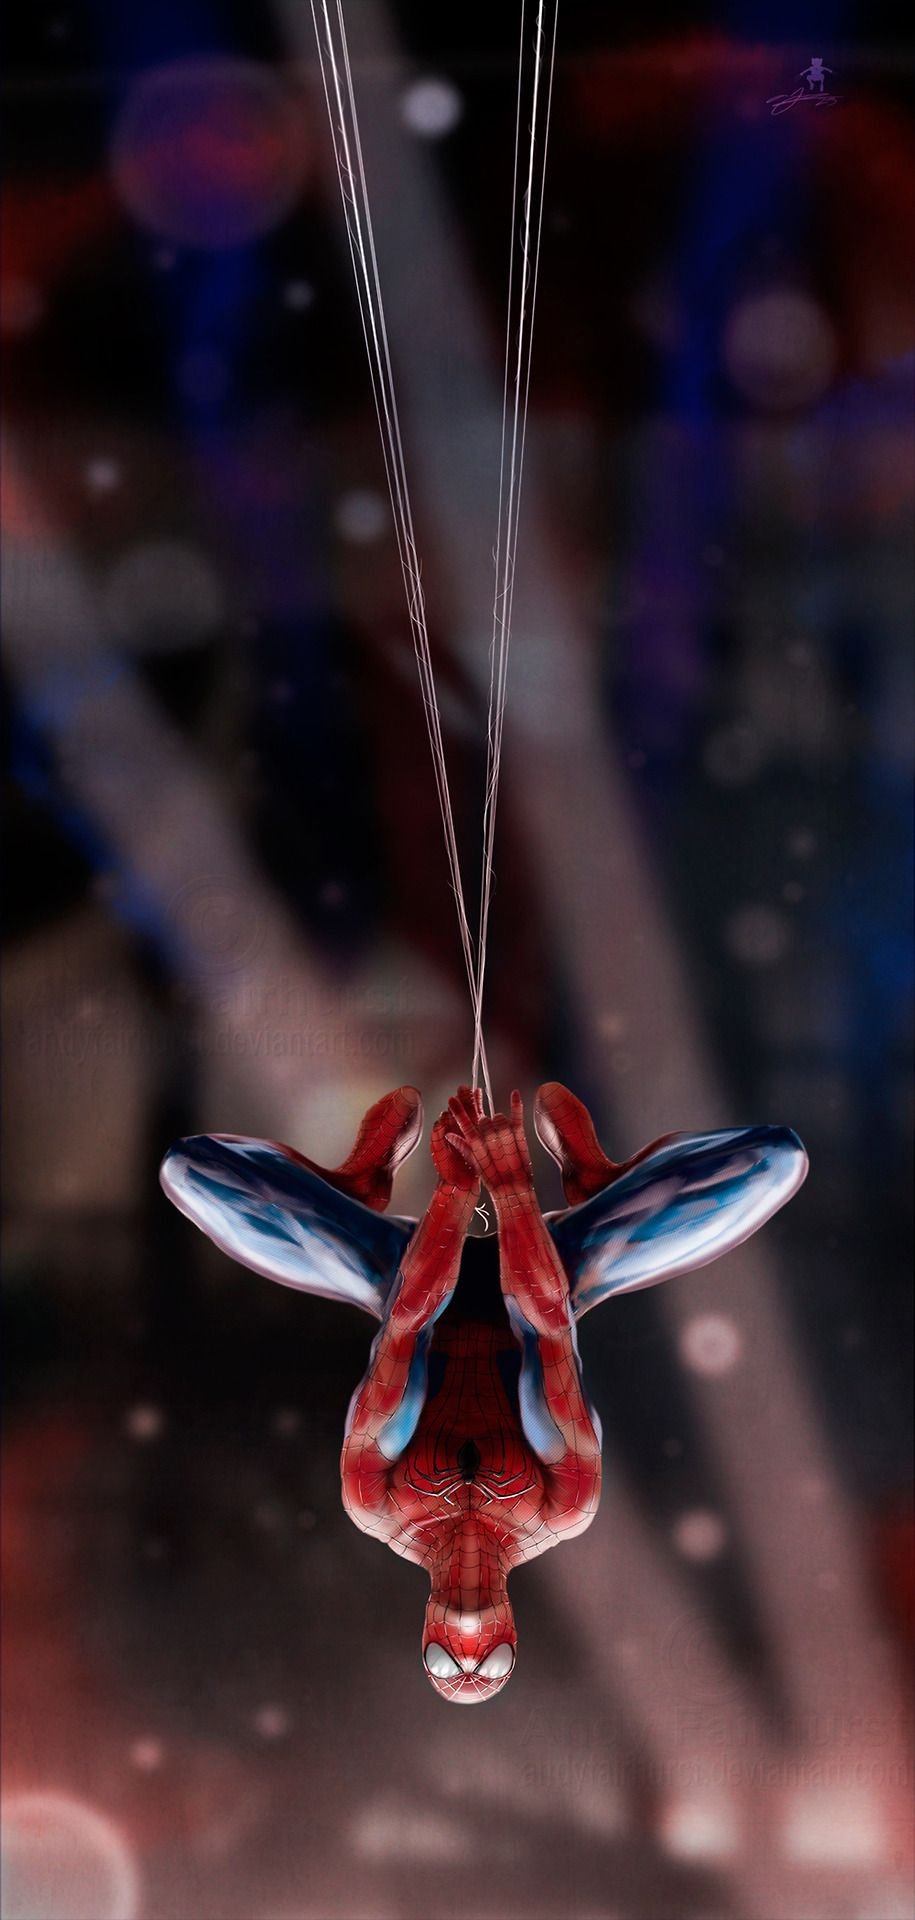 Spiderman Wallpaper For Windows 10